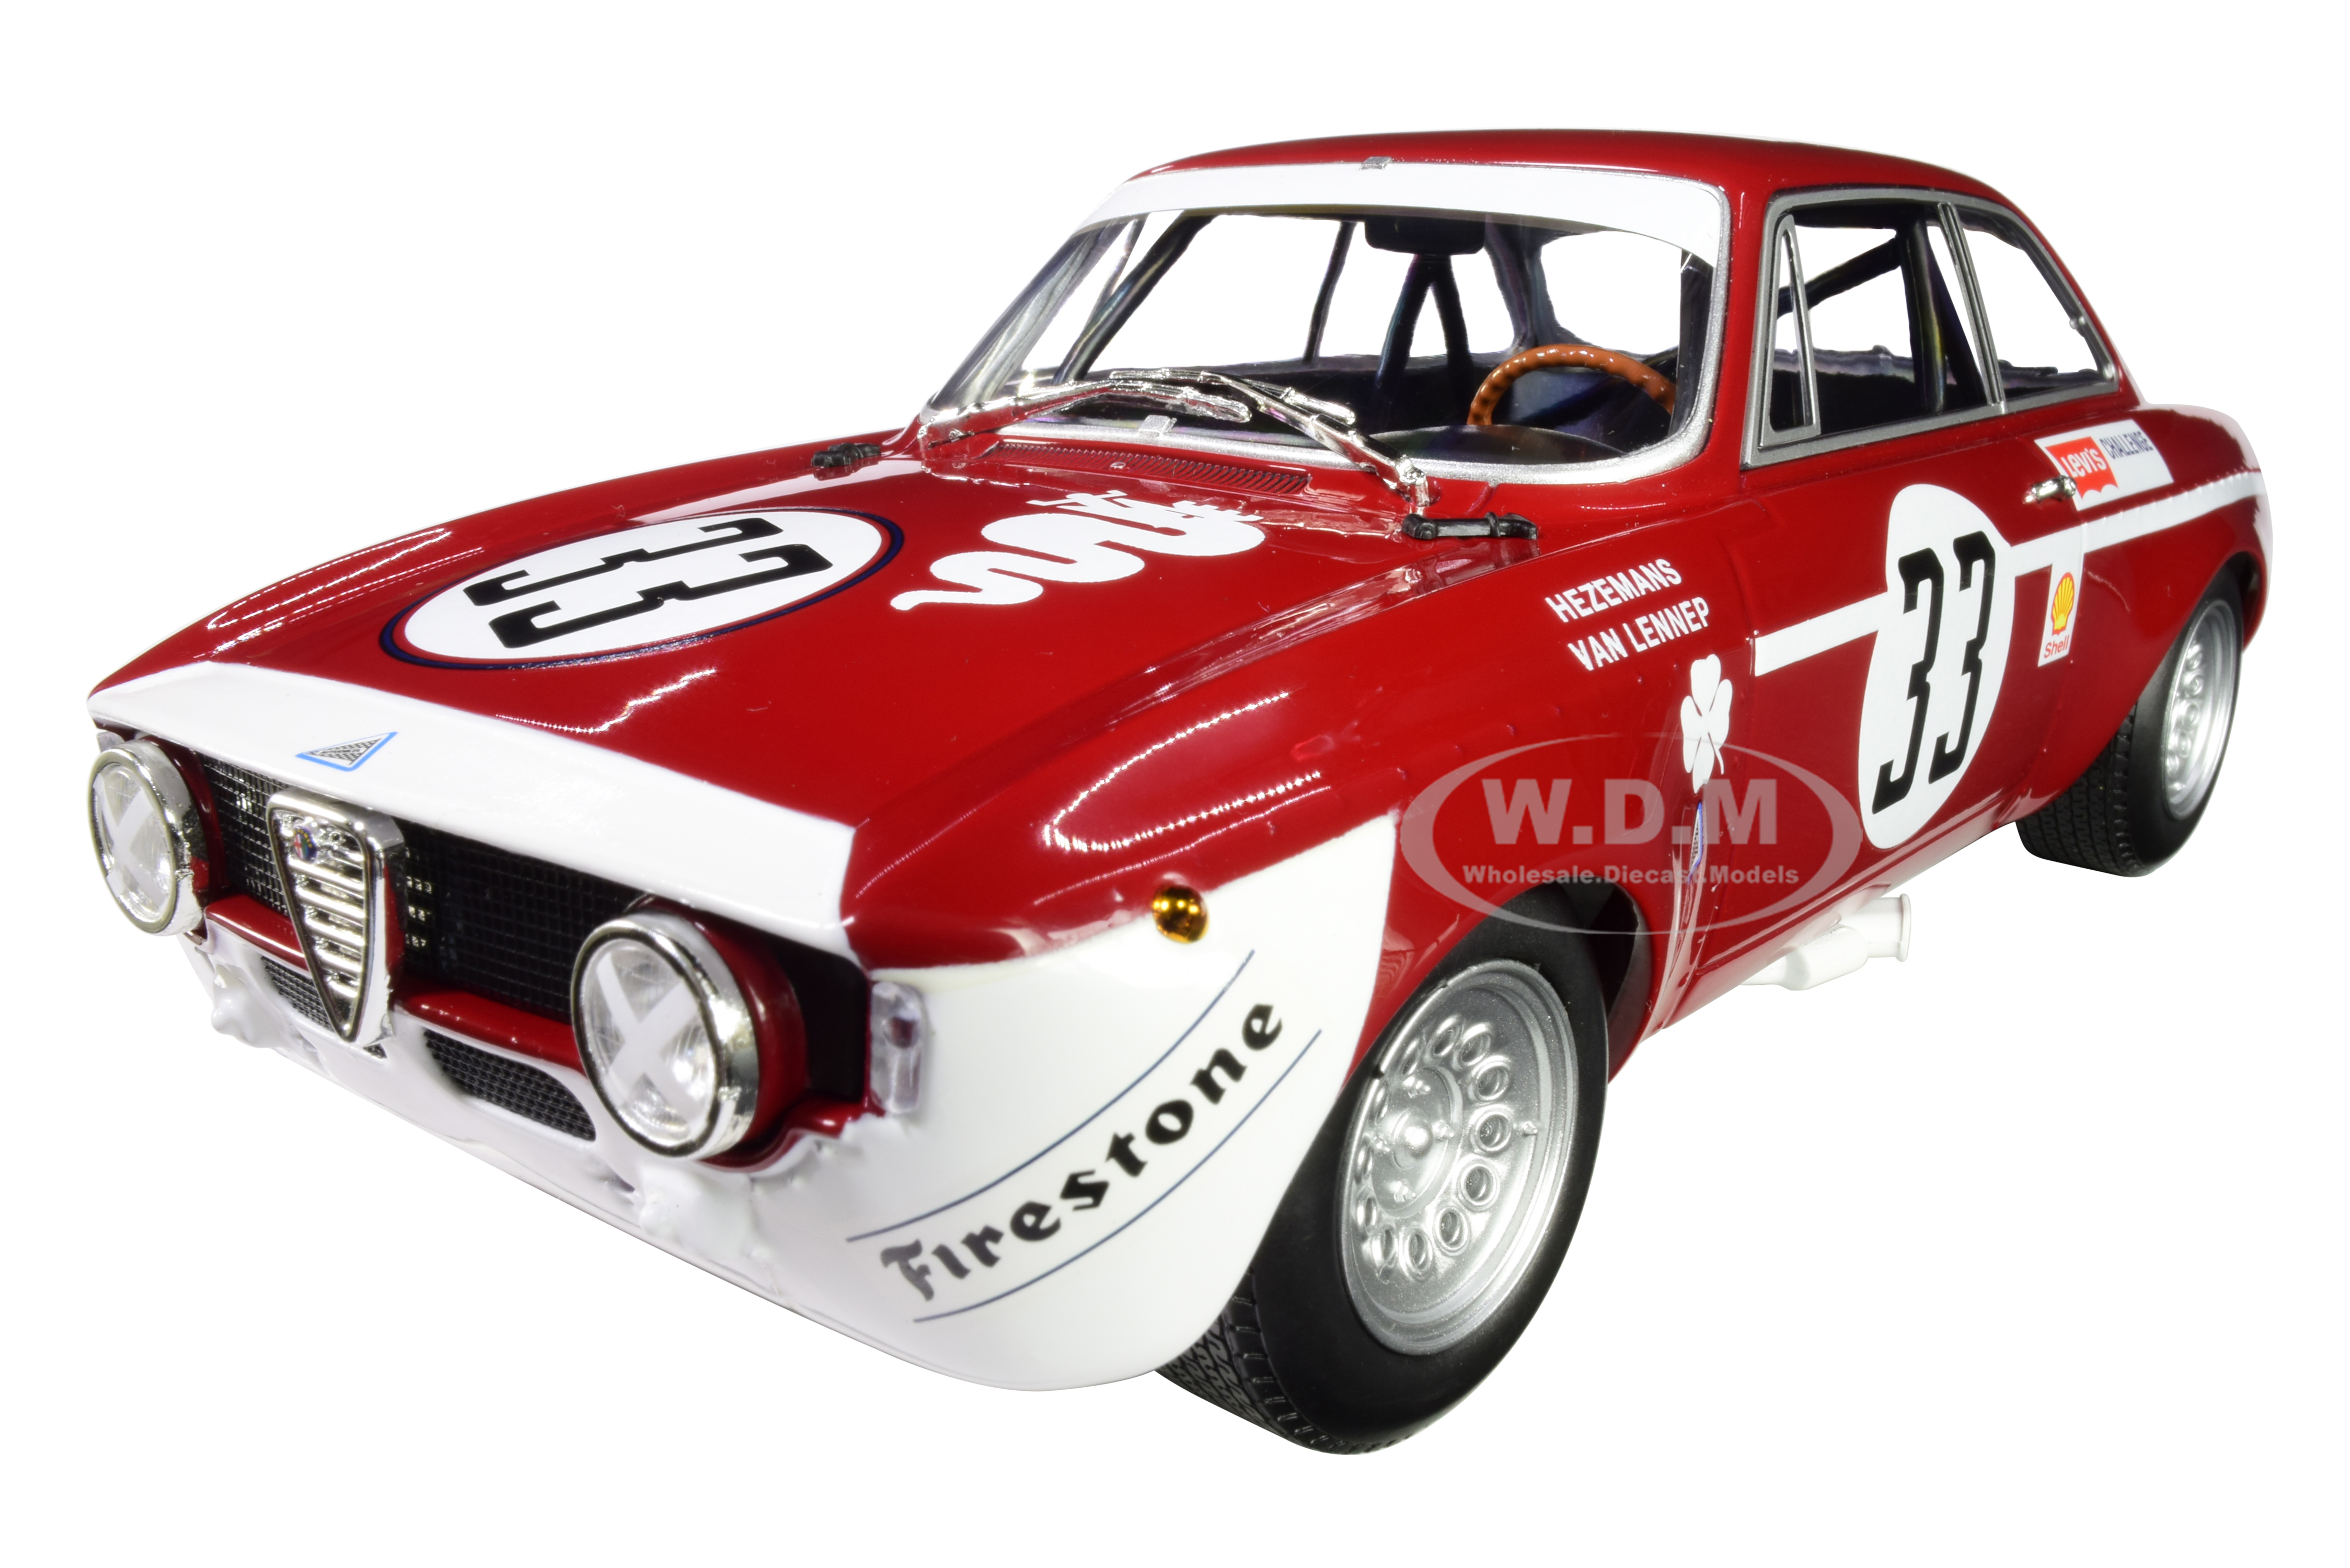 Alfa Romeo Gta 1300 Junior 33 Hezemanns / Van Lennep Winners Division 1 4h Jarama (1972) Limited Edition To 300 Pieces Worldwide 1/18 Diecast Model C